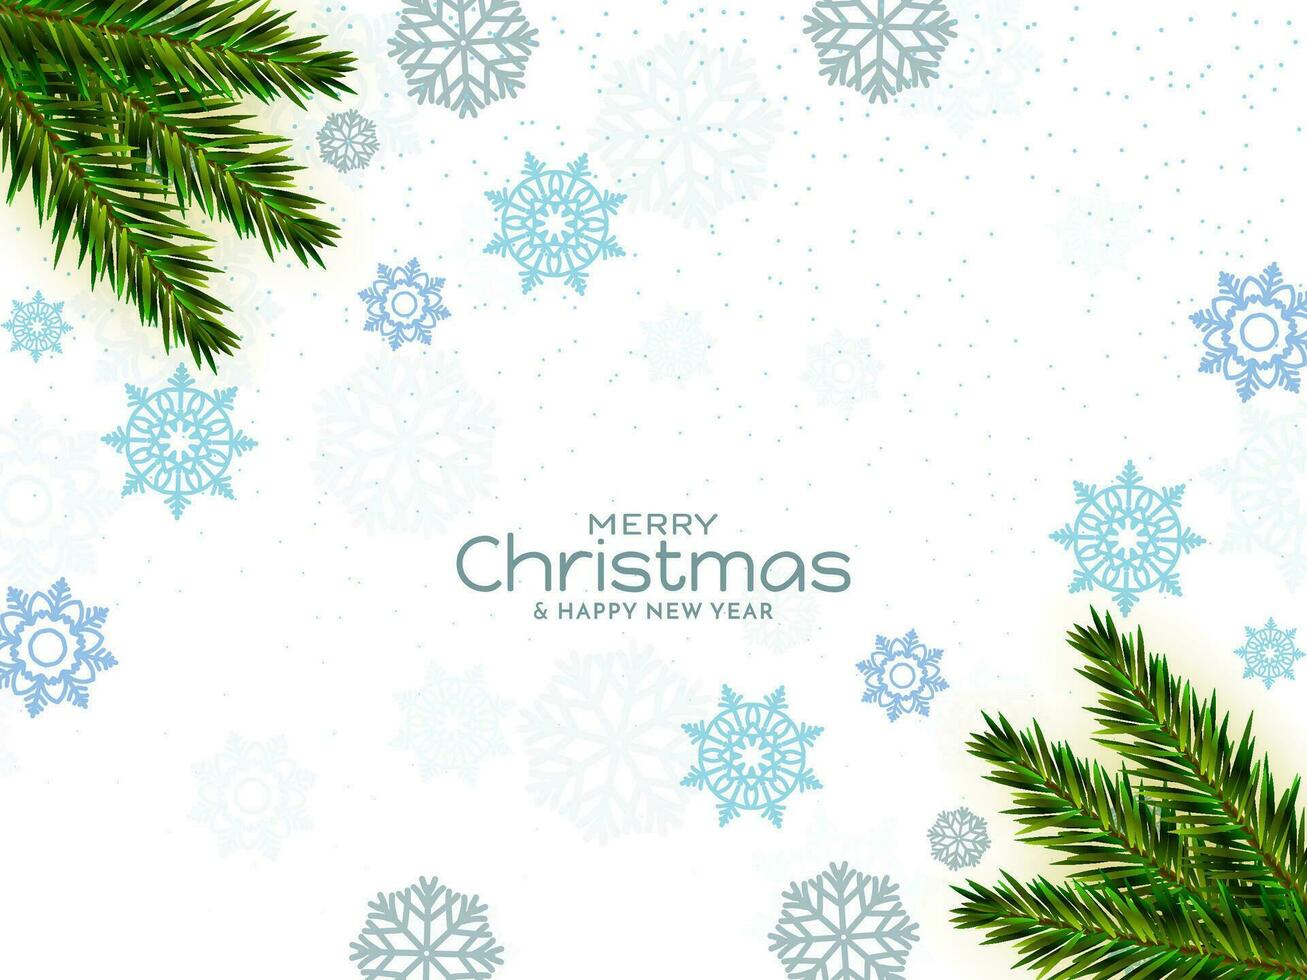 Merry Christmas festival decorative snowflakes celebration card design vector